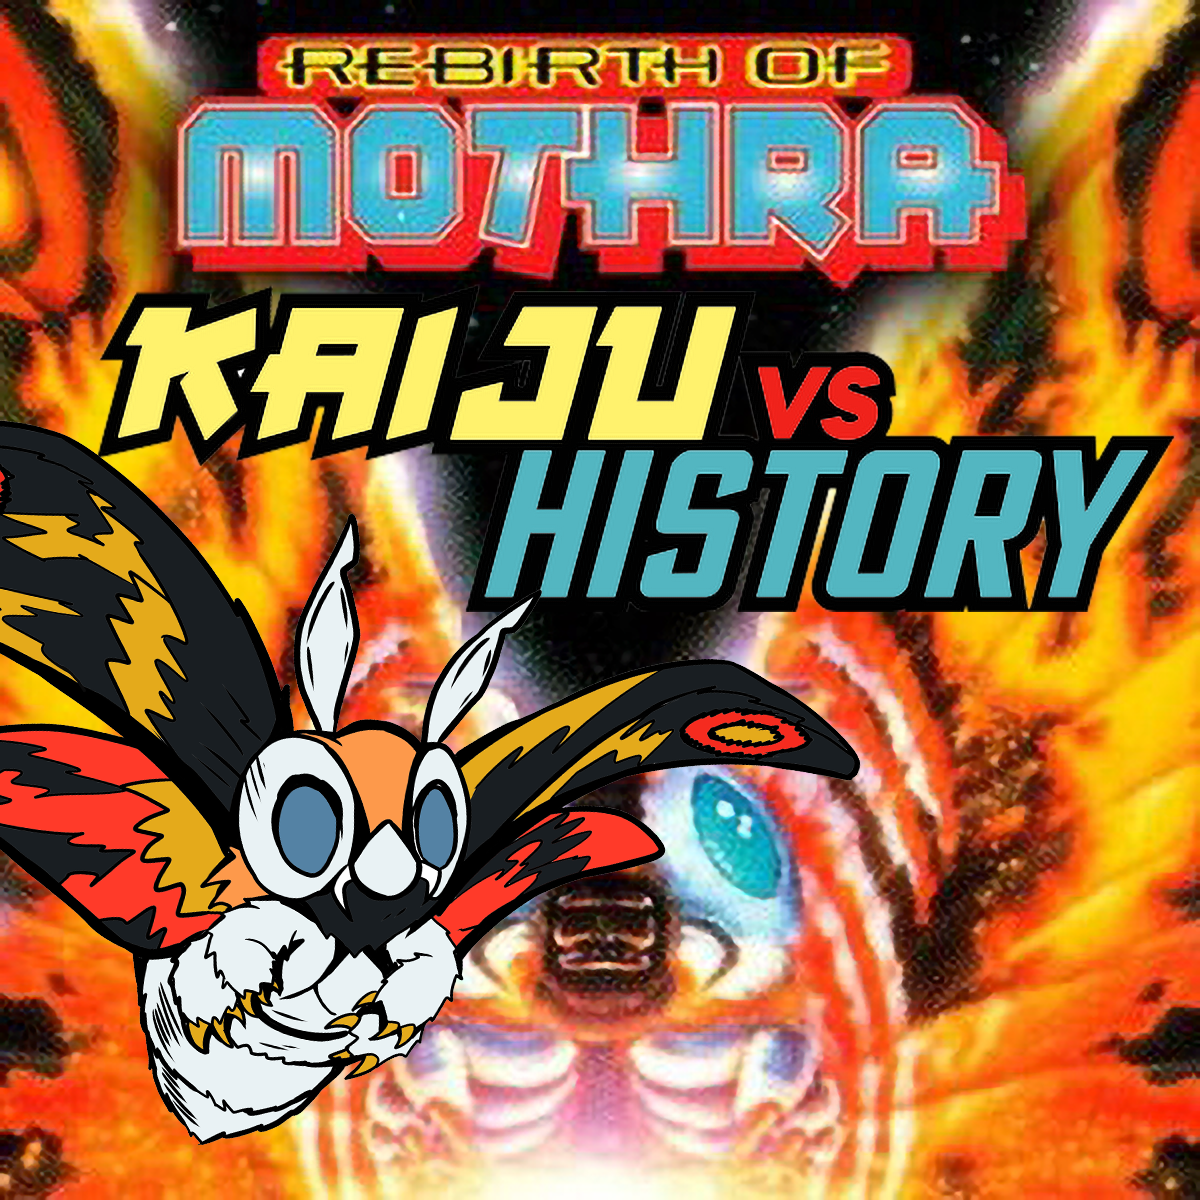 Episode 116 - Rebirth of Mothra (1996)